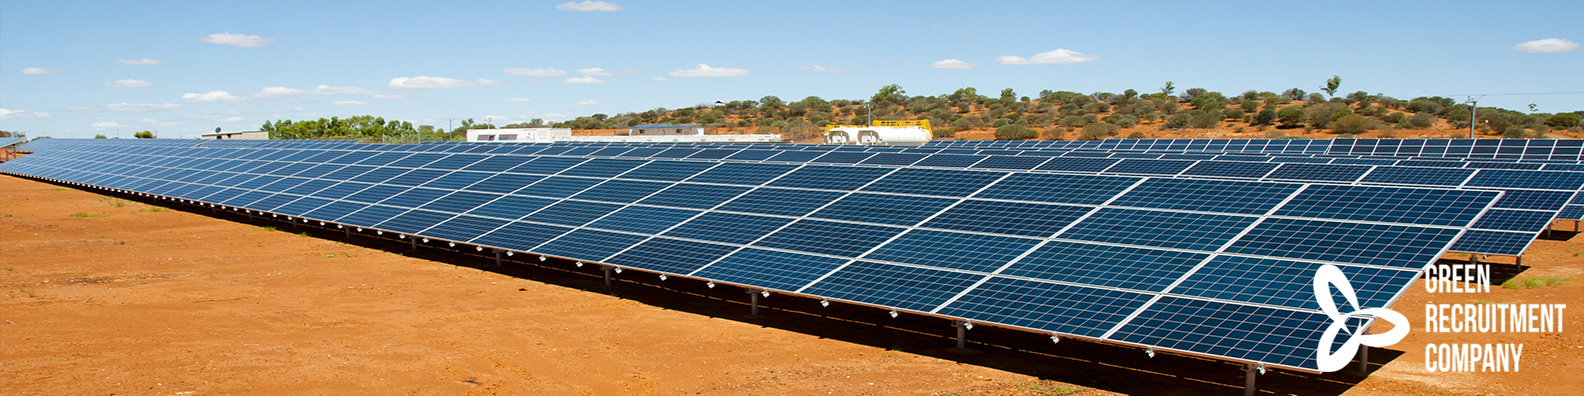 Tgrc   Australia Renewable Energy Recruitment Banner   08